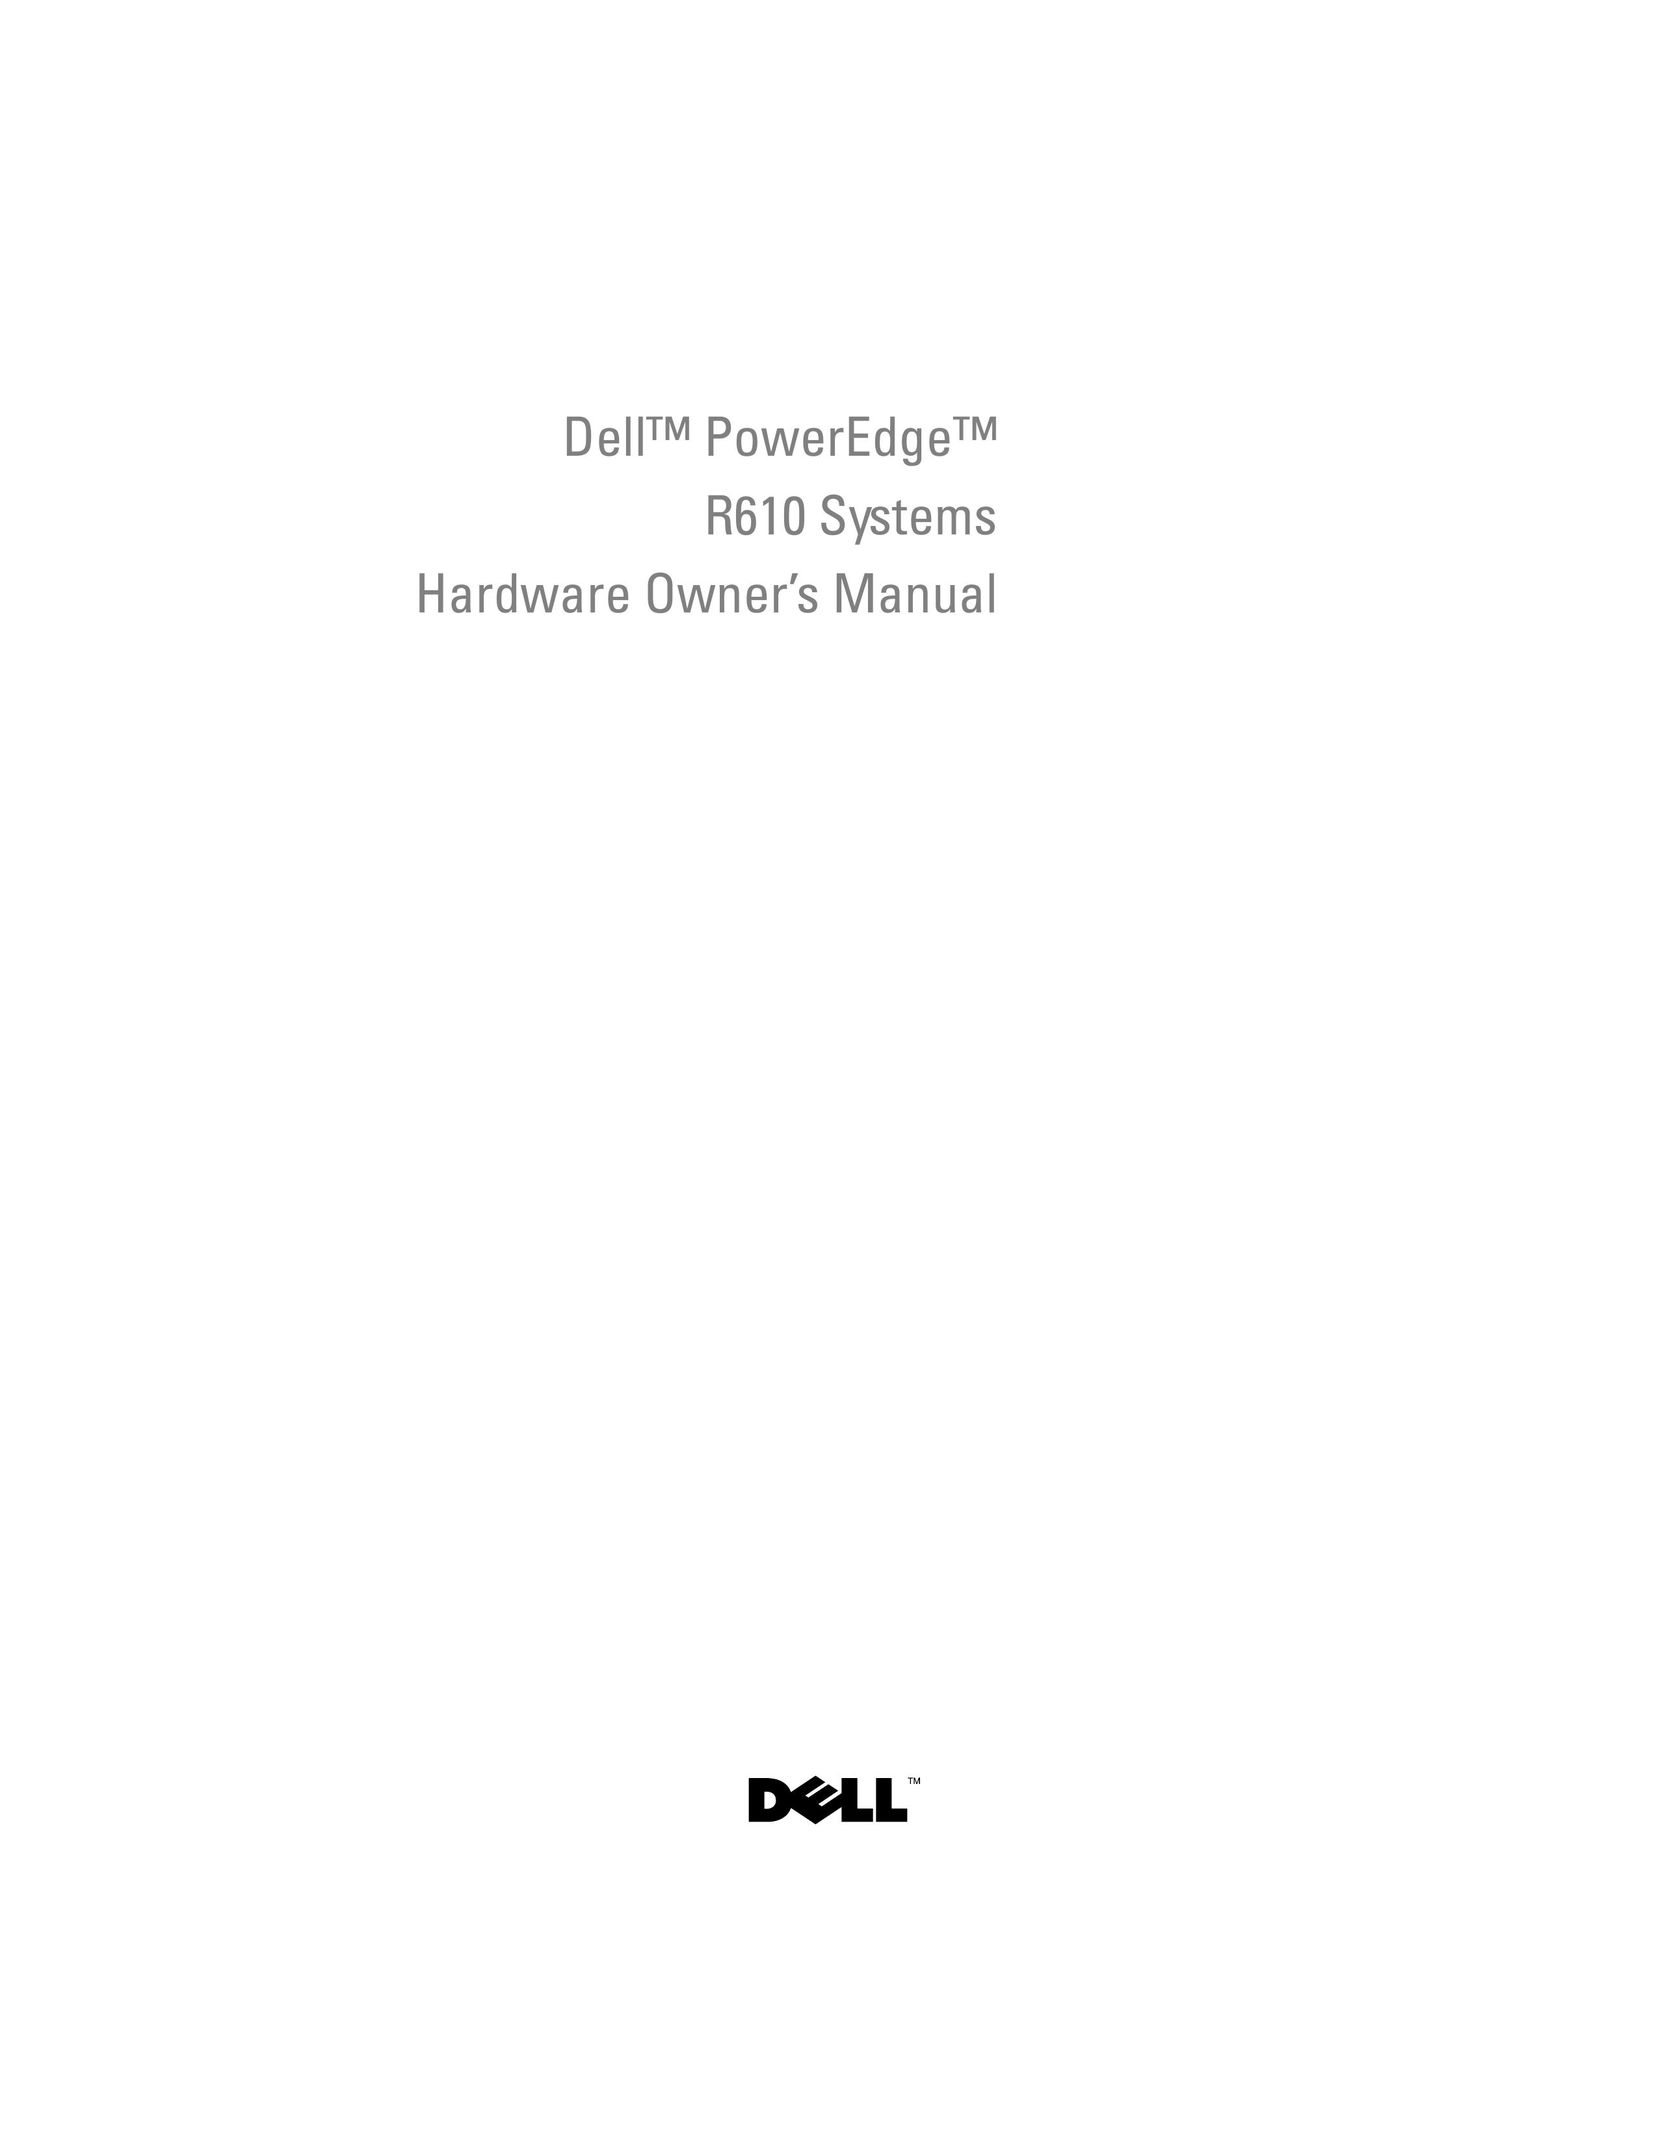 Dell A03 Server User Manual